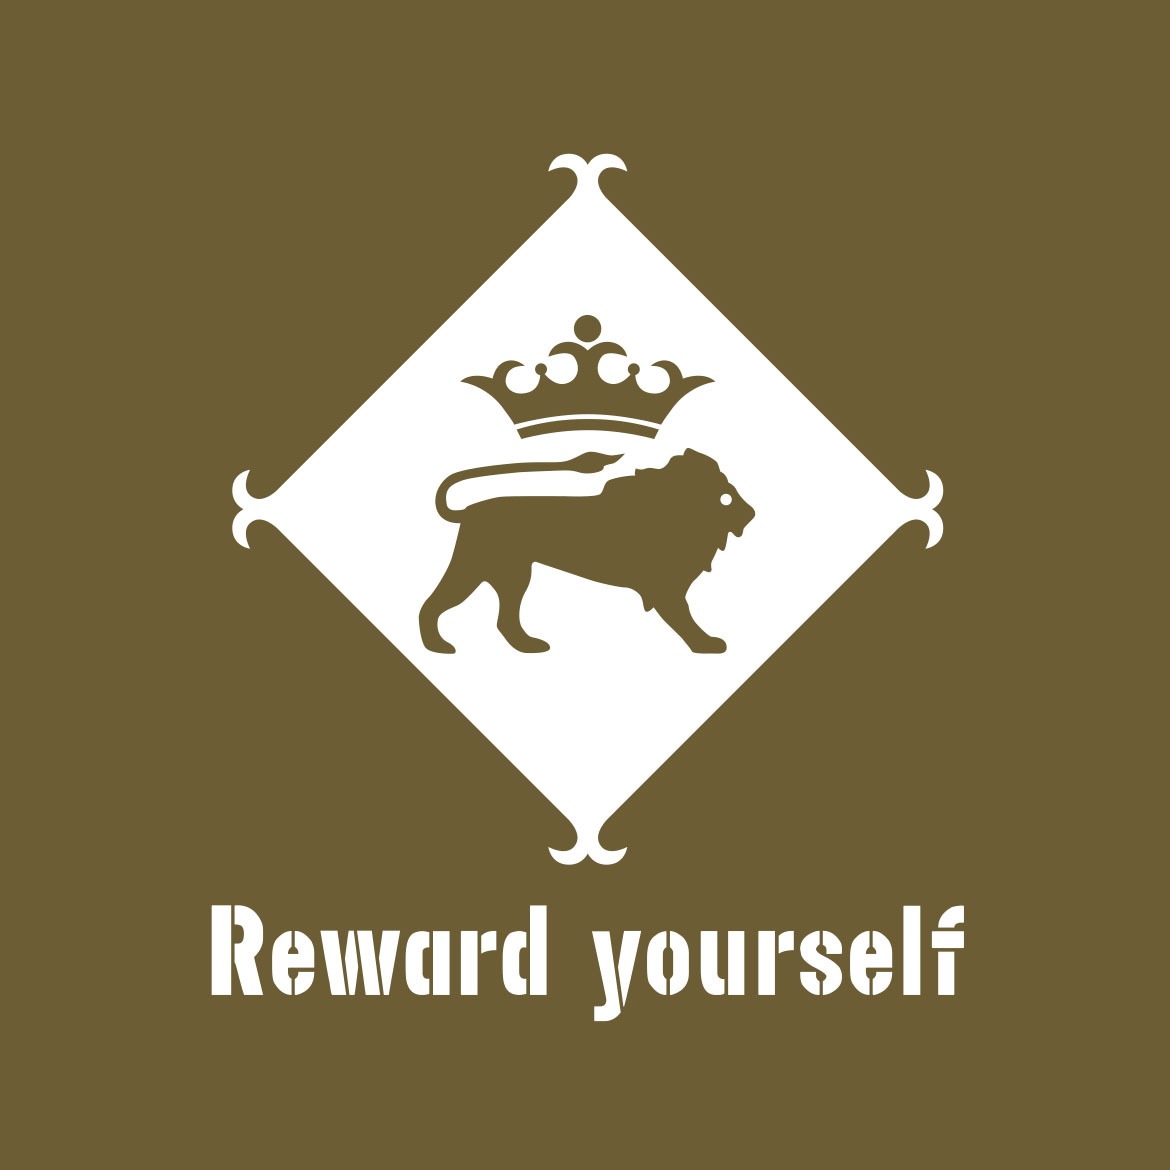 Reward yourself by EC